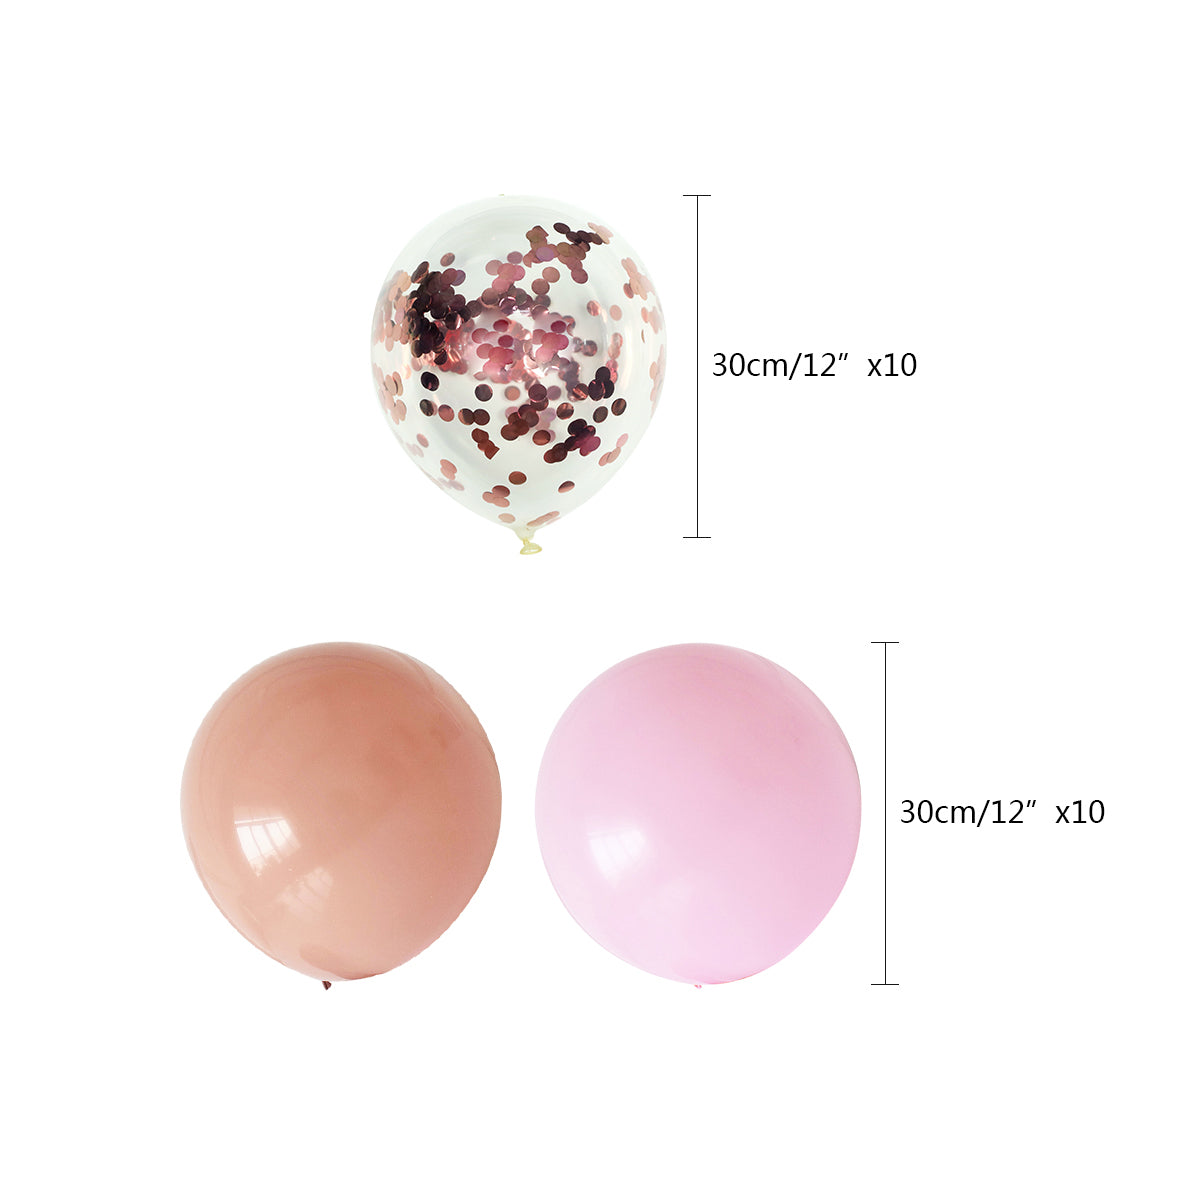 Rose Gold & Pink Bridal Shower Decoration Kit - 40 Pieces!